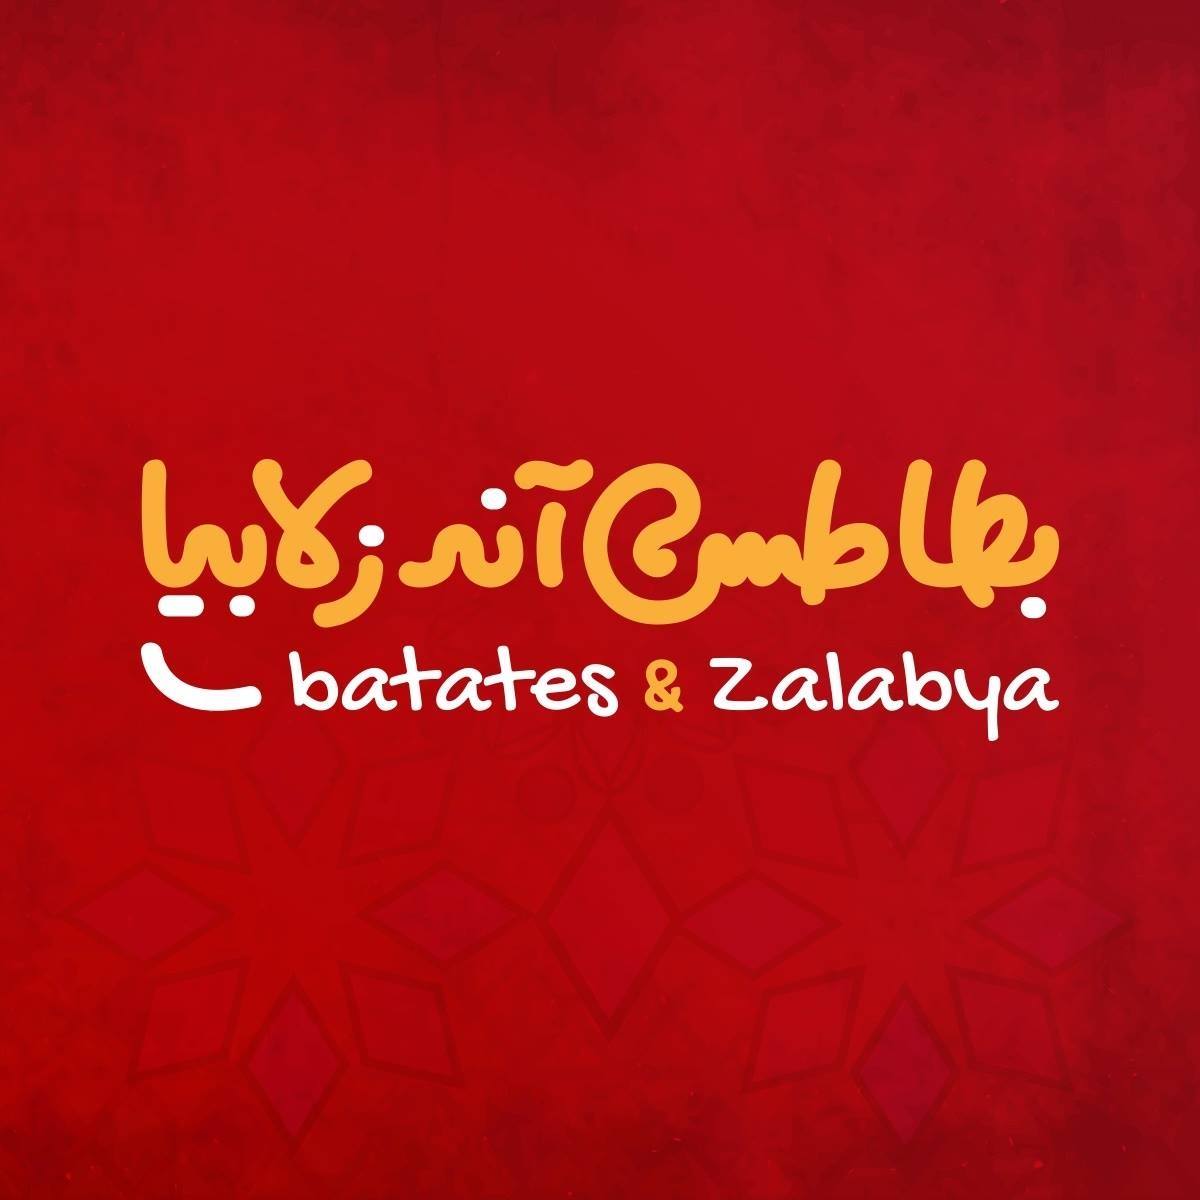 Batates and Zalabya